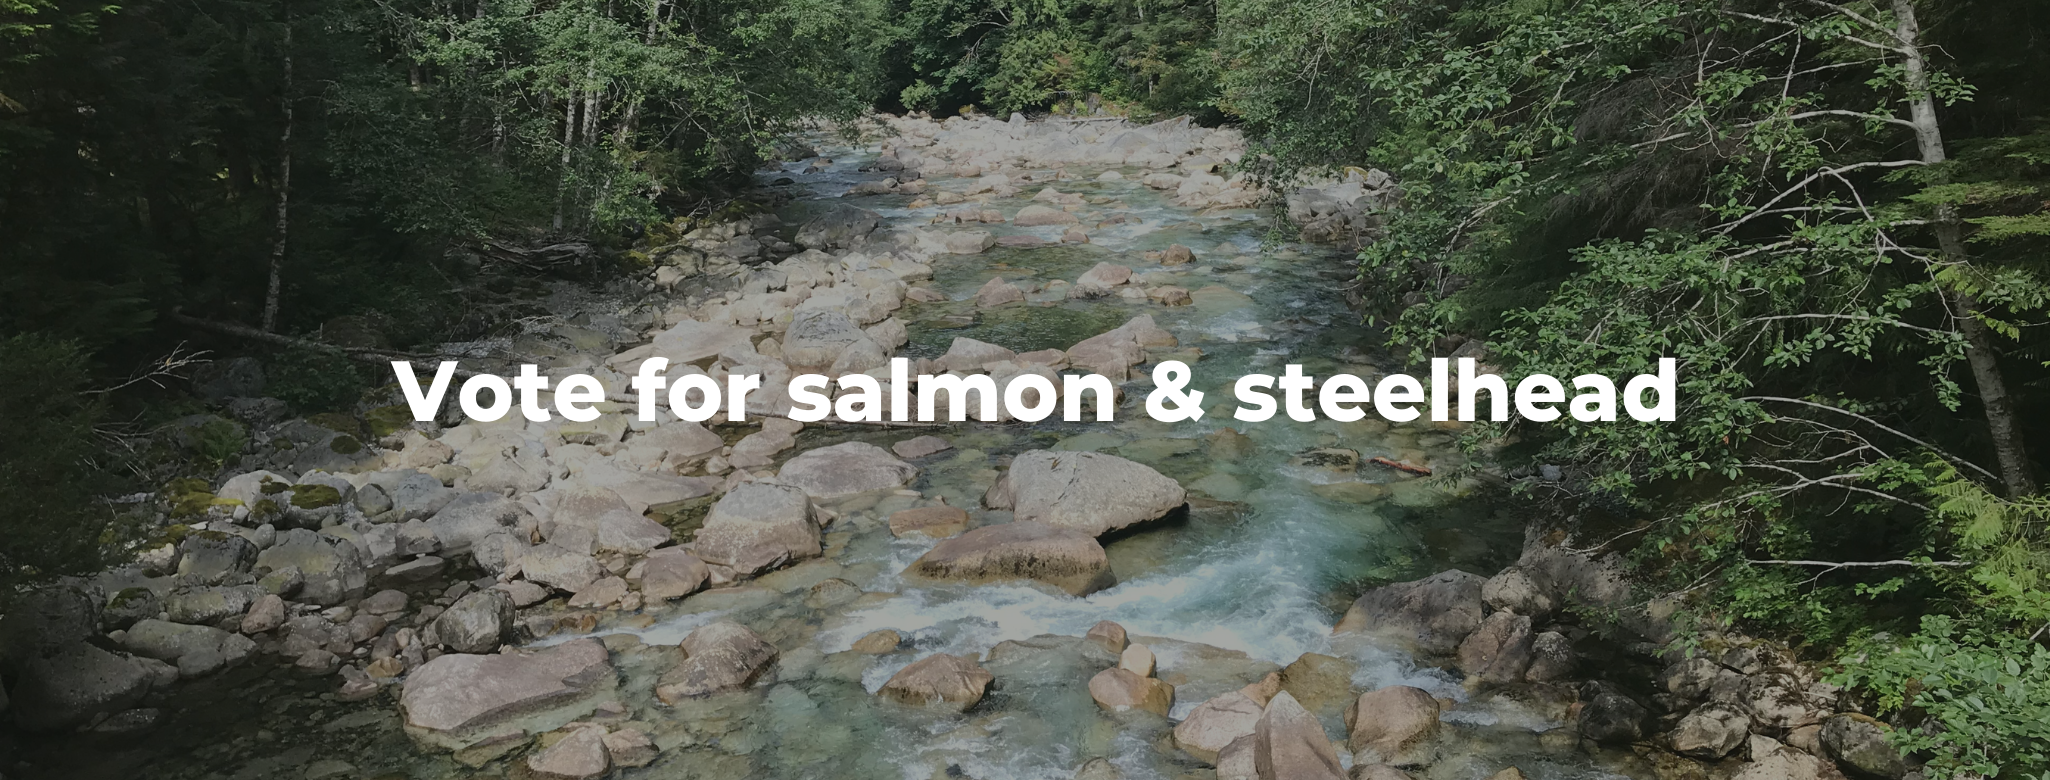 Vote for salmon & steelhead